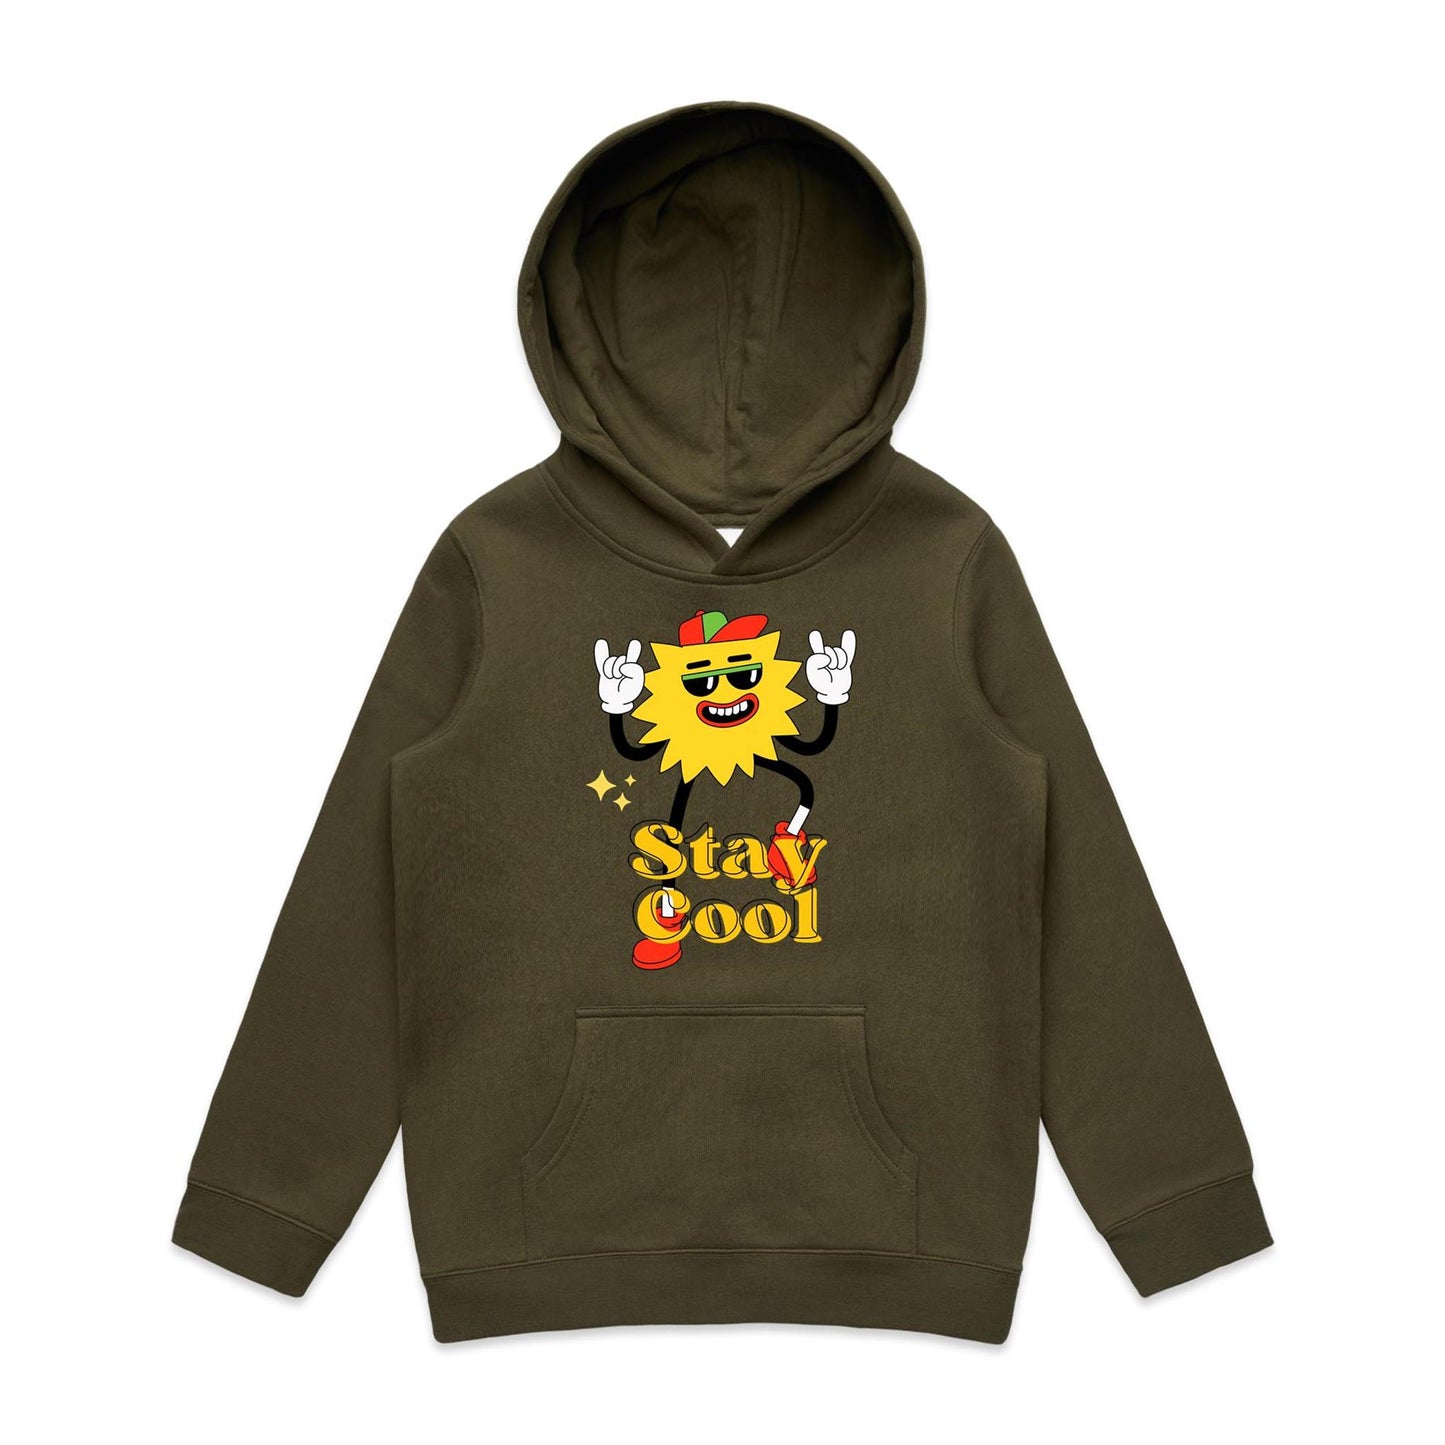 Stay Cool - Youth Supply Hood Army Kids Hoodie